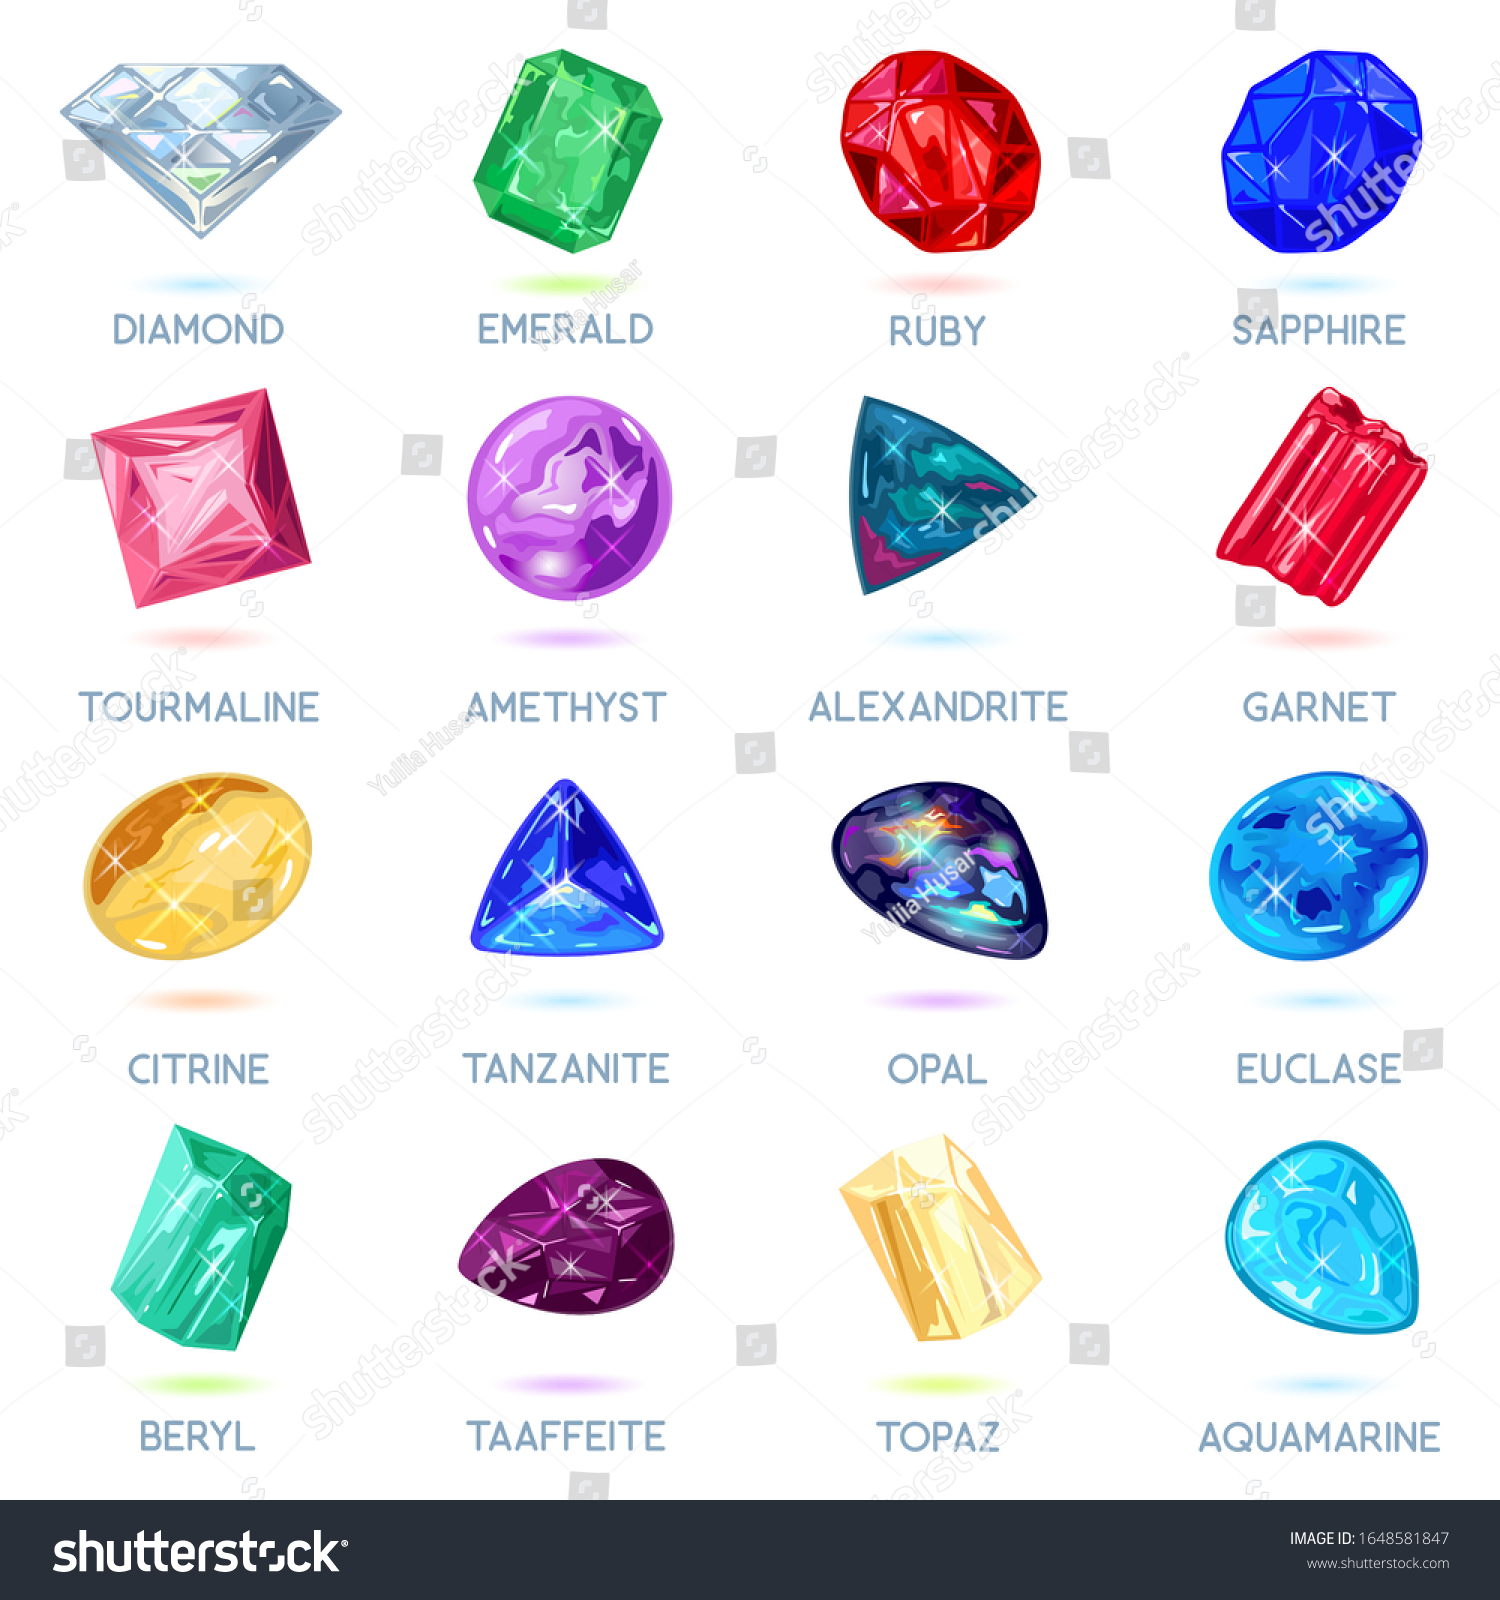 SVG of Assortment of jewelry, gem shop. Big vector set with red, yellow, pink, blue, green, purple minerals, gemstones: diamond, emerald, ruby, sapphire, tourmaline, amethyst, alexandrite, garnet, citrine. svg